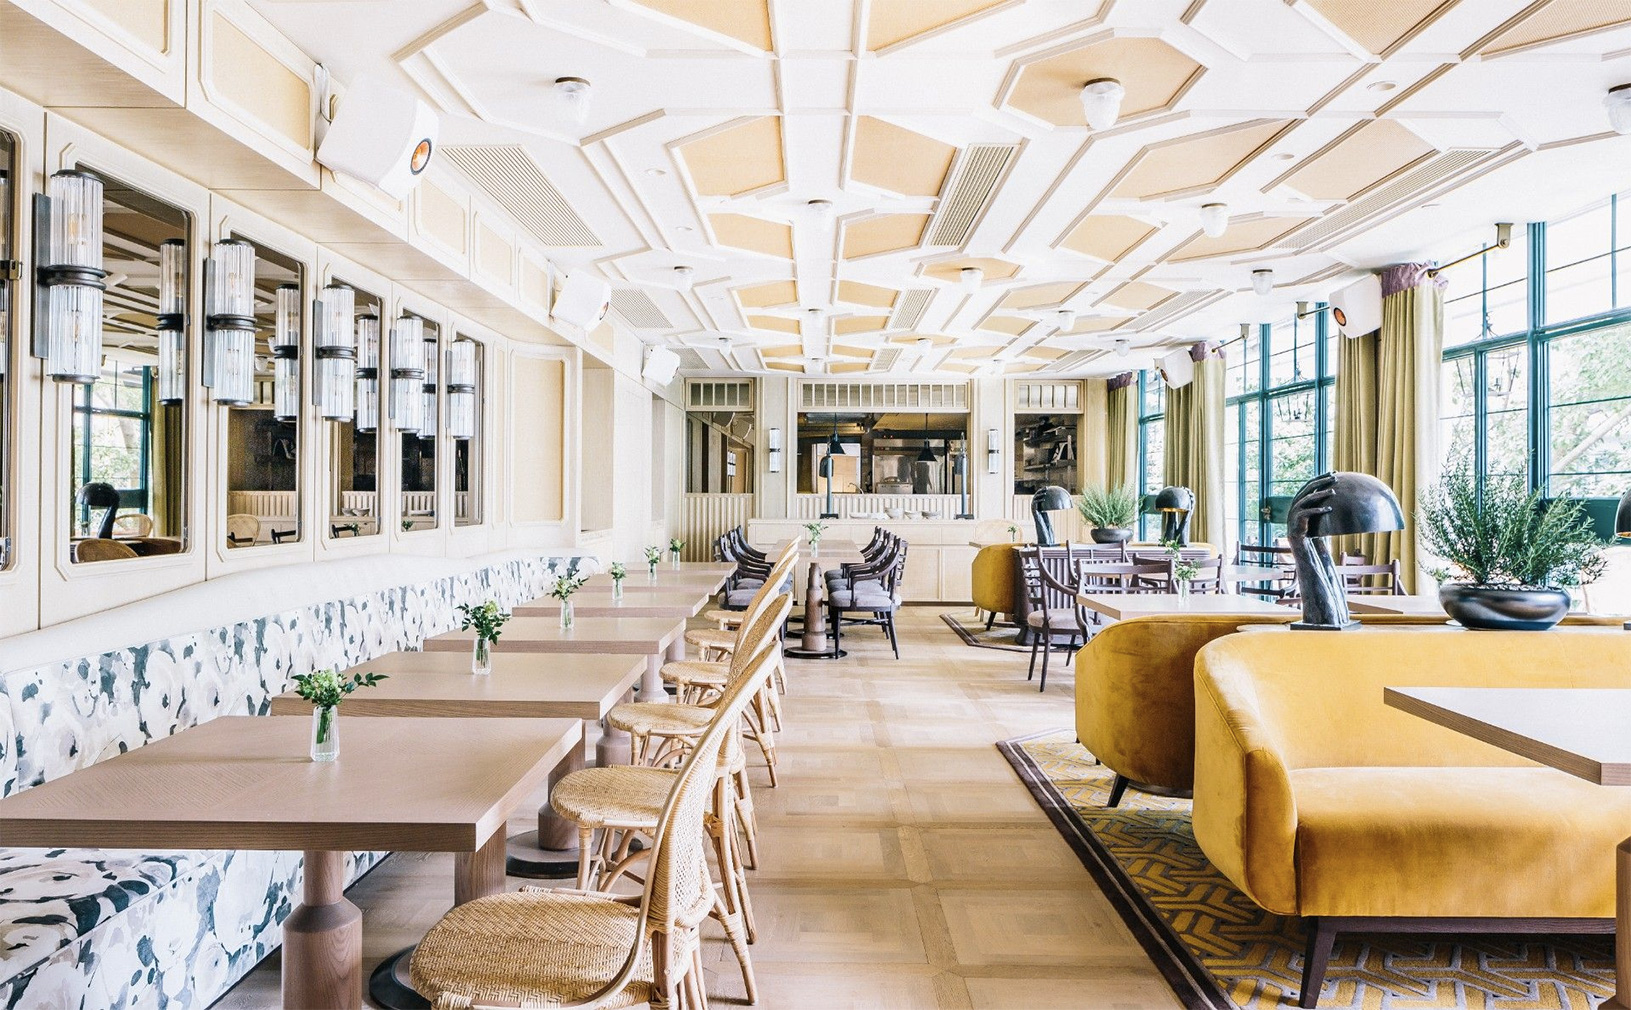 The Franco-tropical interiors of new Hong Kong restaurant Louise